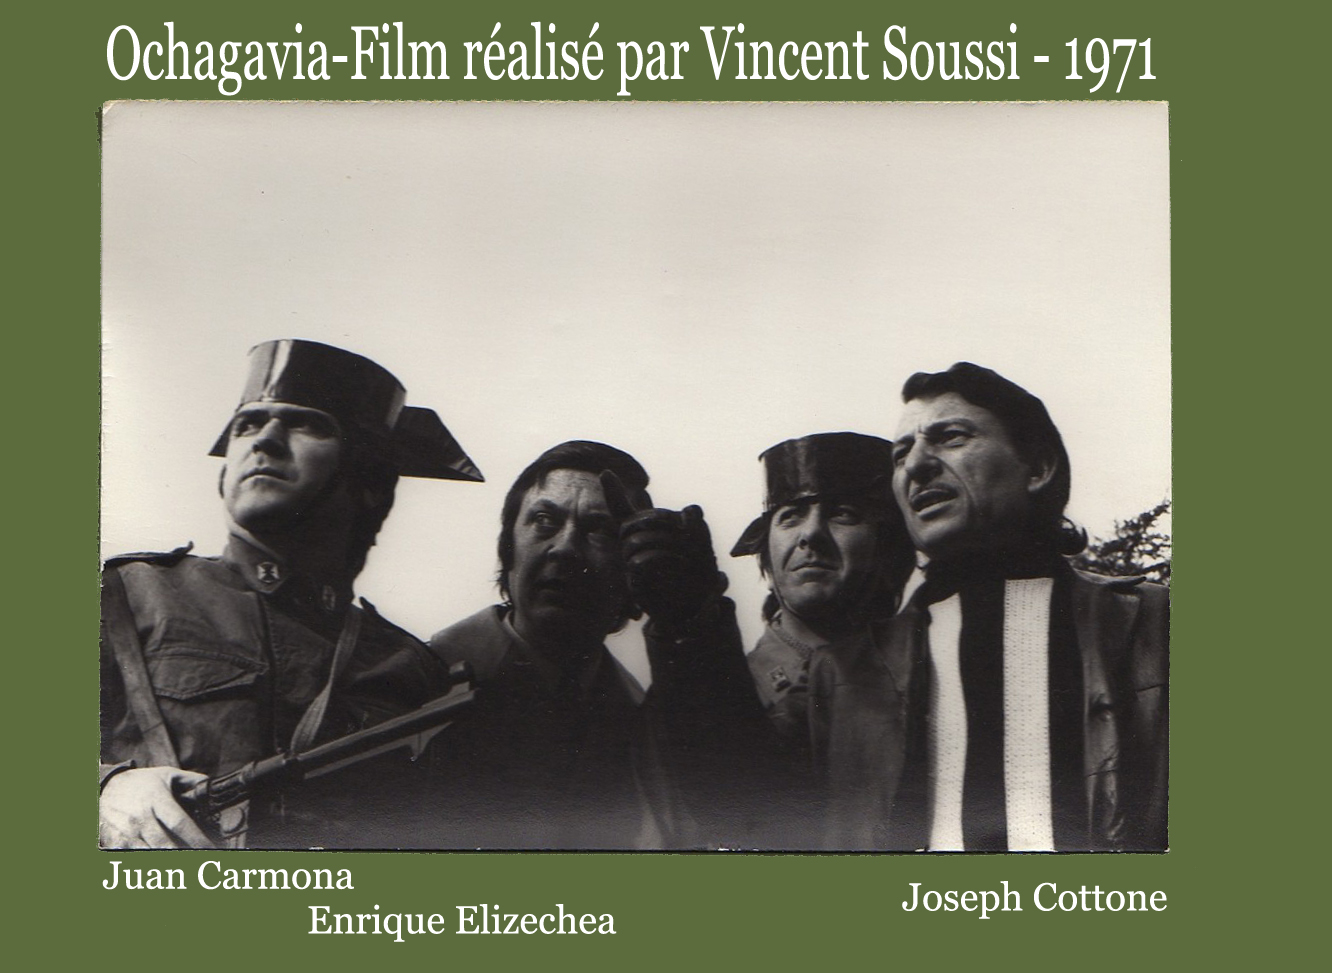 1971 ochagavia carmona elizechea cottone texte film soussi